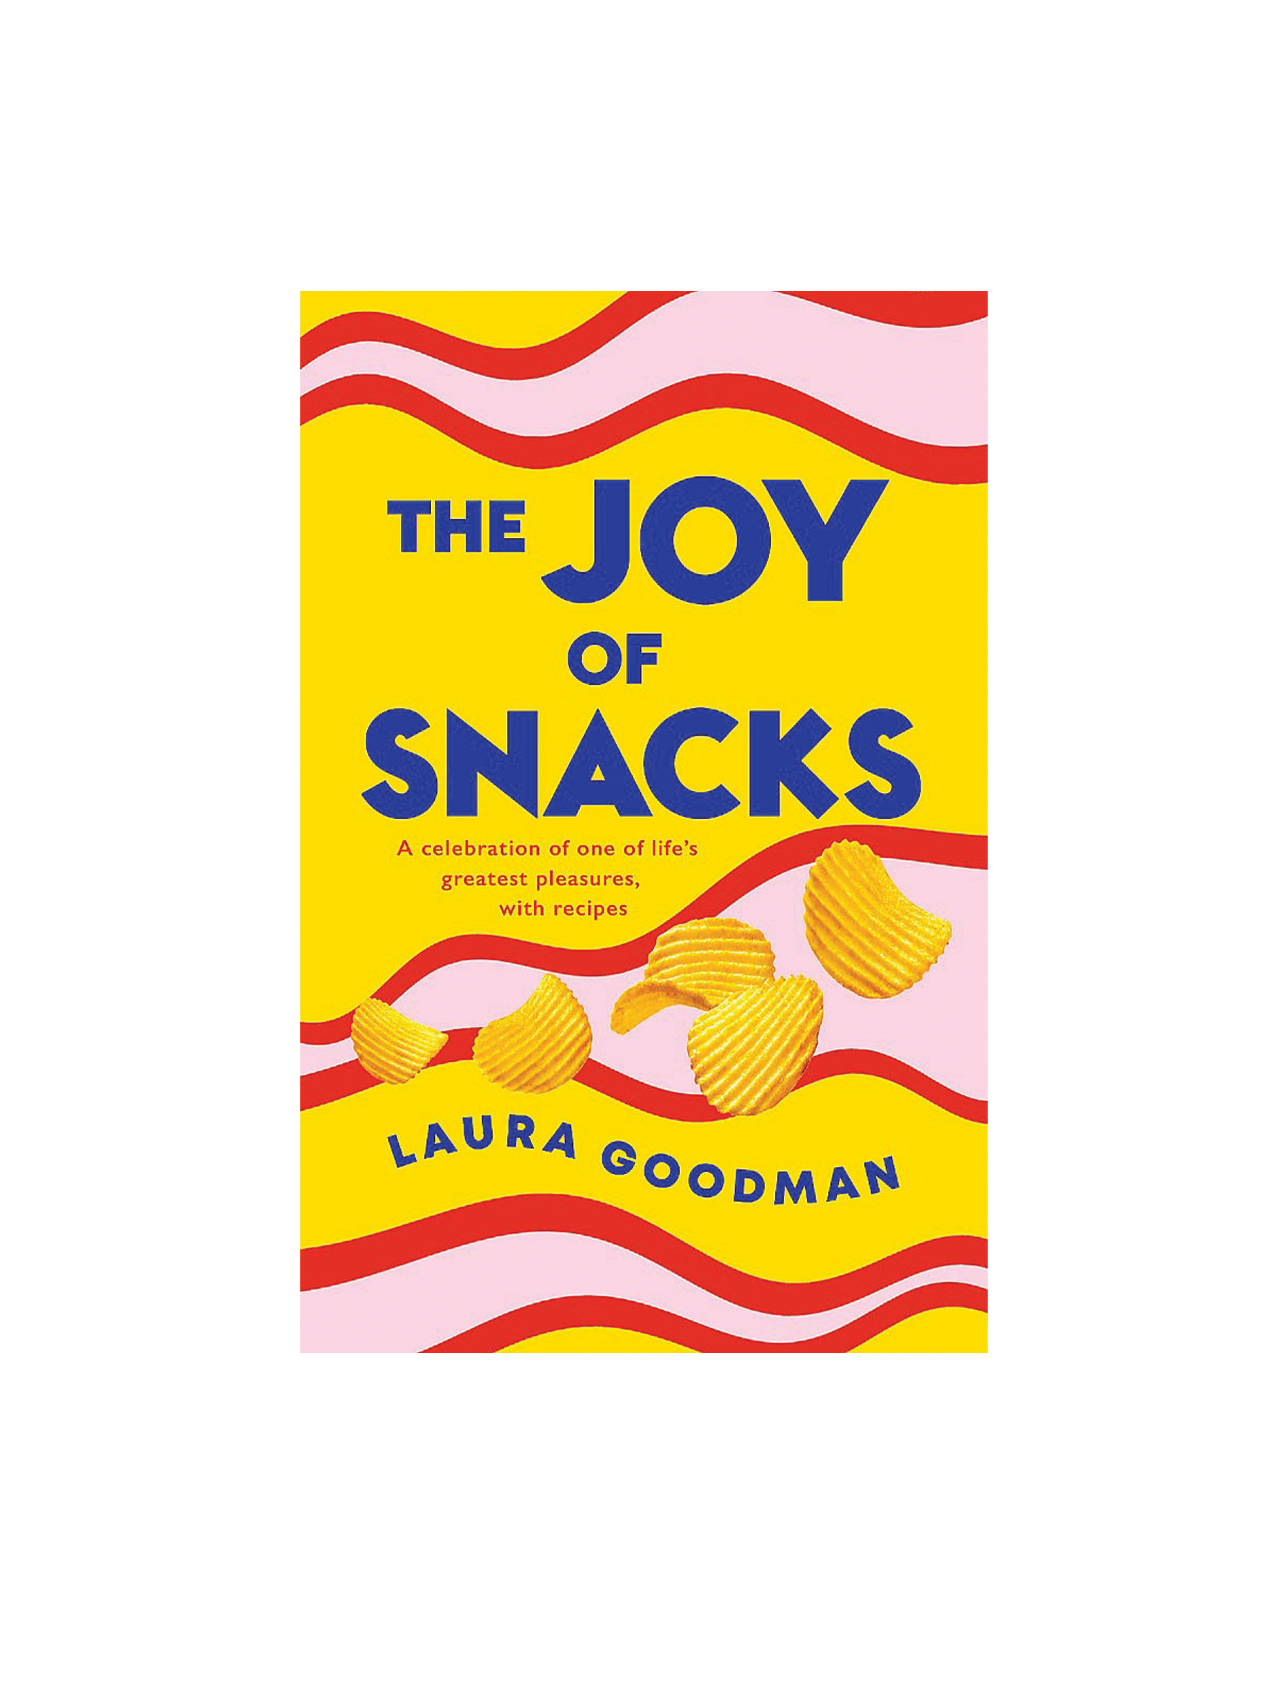 The Joy of Snacks by Laura Goodman